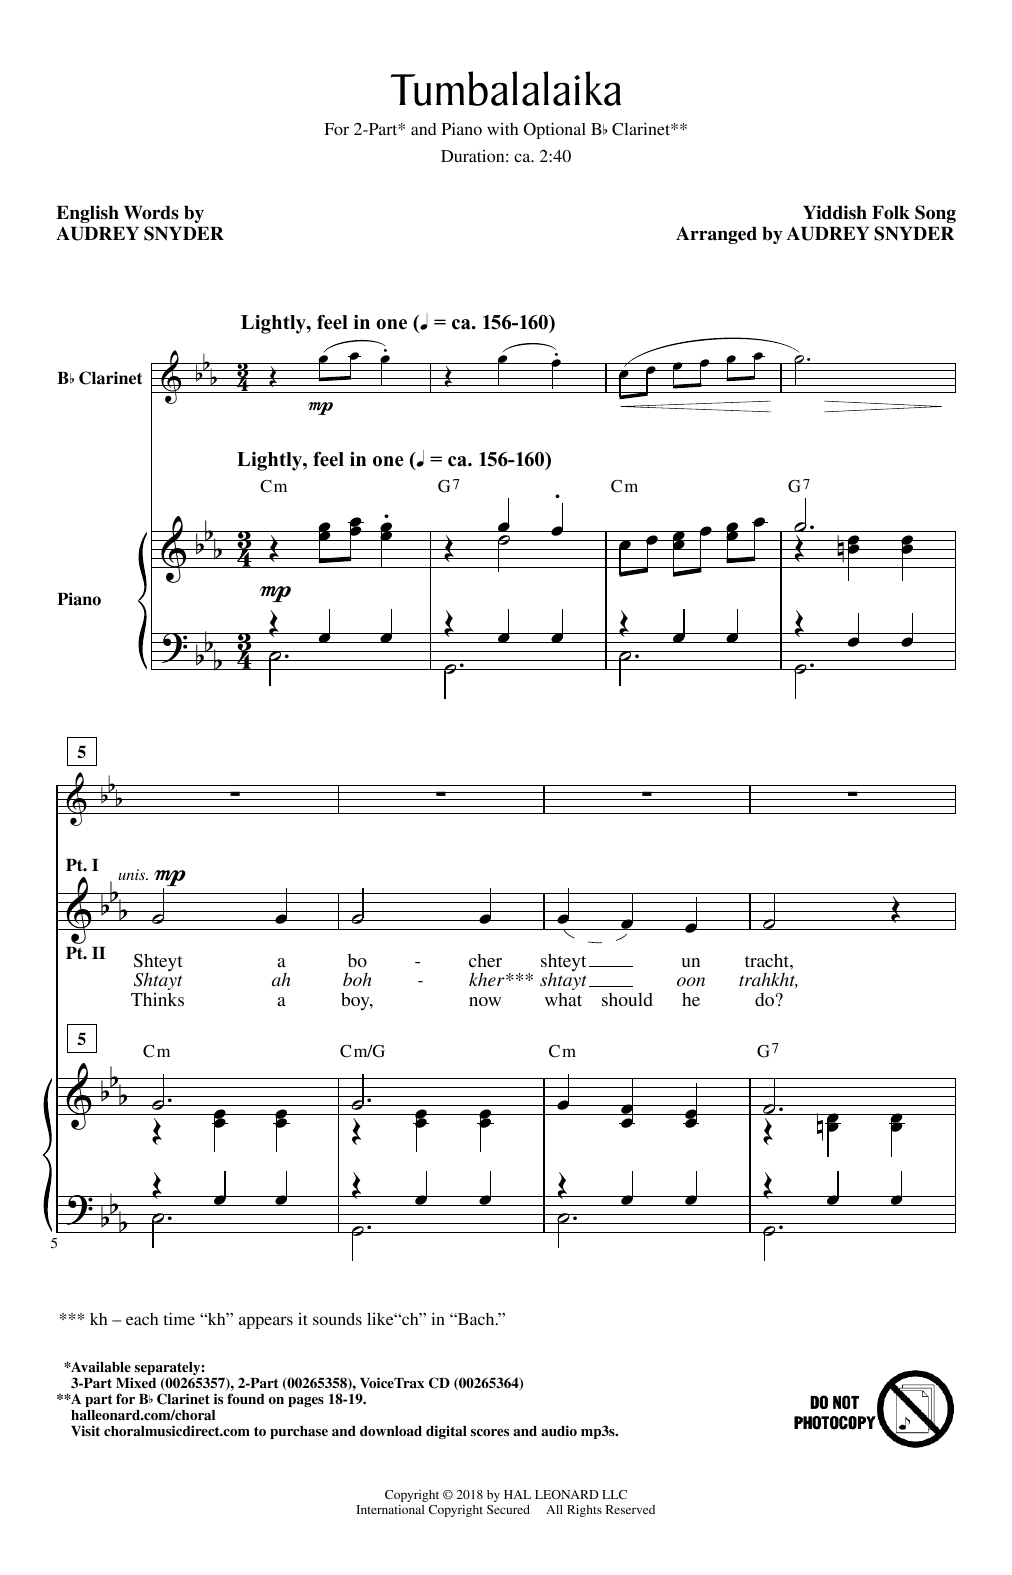 Audrey Snyder Tumbalalaika Sheet Music Notes & Chords for 2-Part Choir - Download or Print PDF